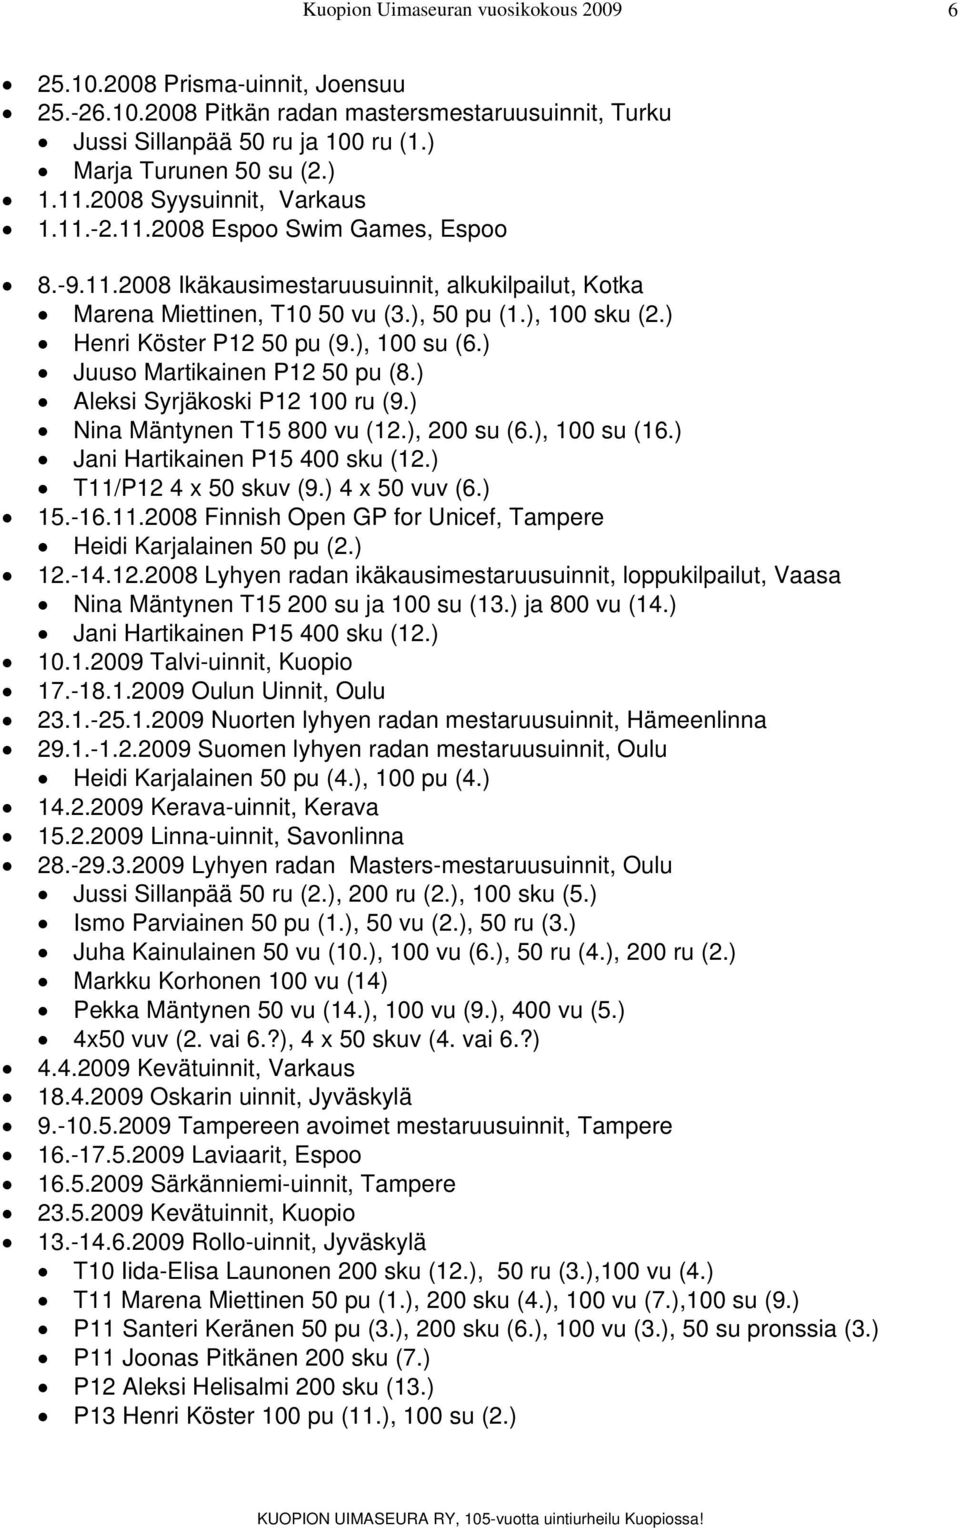 ) Henri Köster P12 50 pu (9.), 100 su (6.) Juuso Martikainen P12 50 pu (8.) Aleksi Syrjäkoski P12 100 ru (9.) Nina Mäntynen T15 800 vu (12.), 200 su (6.), 100 su (16.